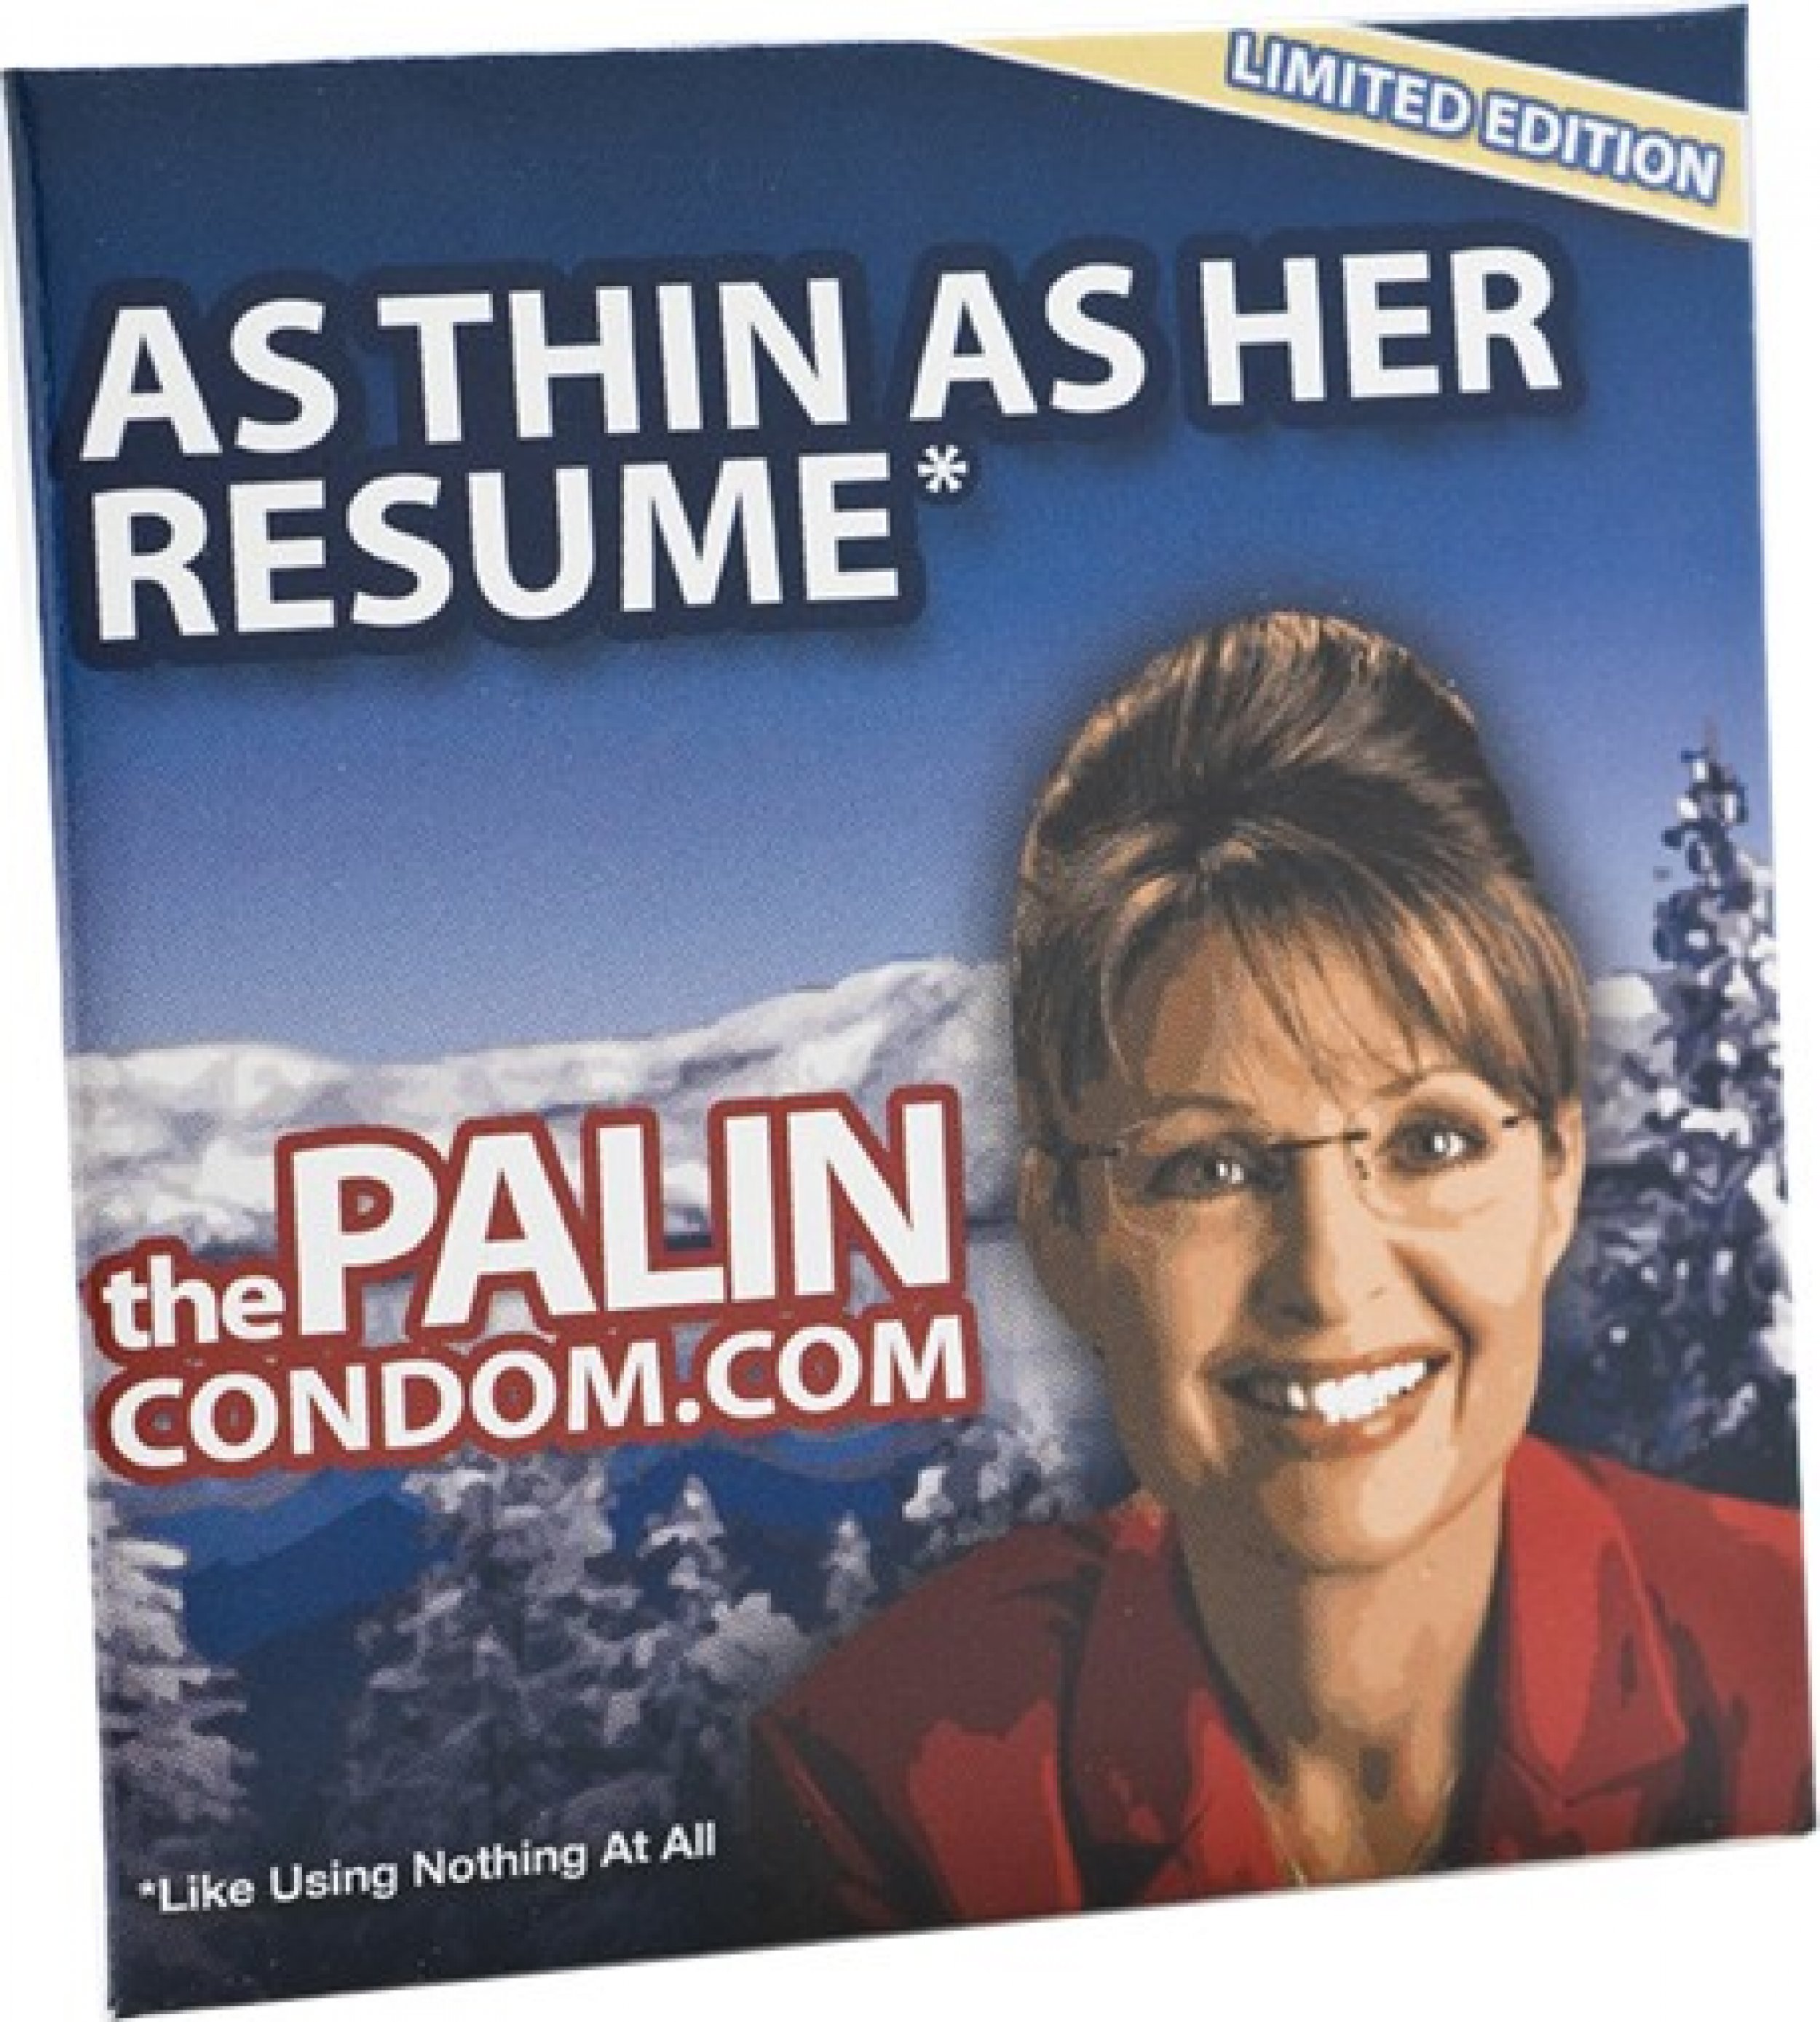 The Palin Condom